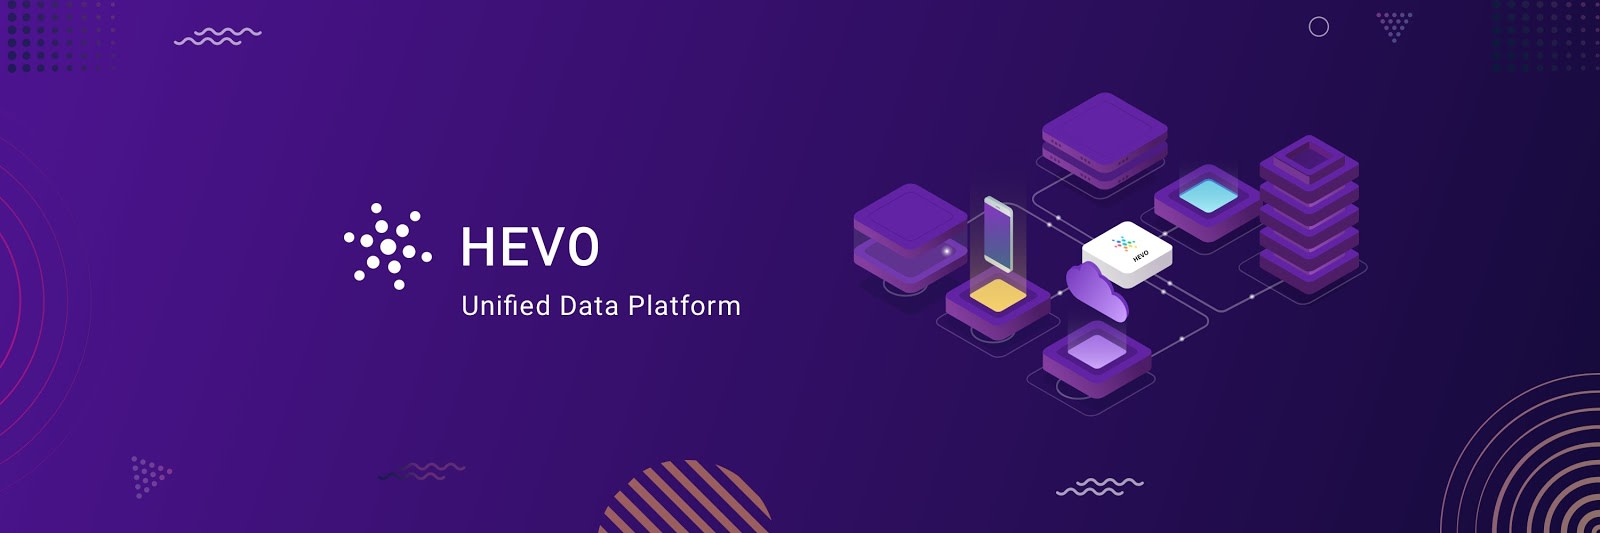 Tableau REST API: Hevo Logo | Hevo Data